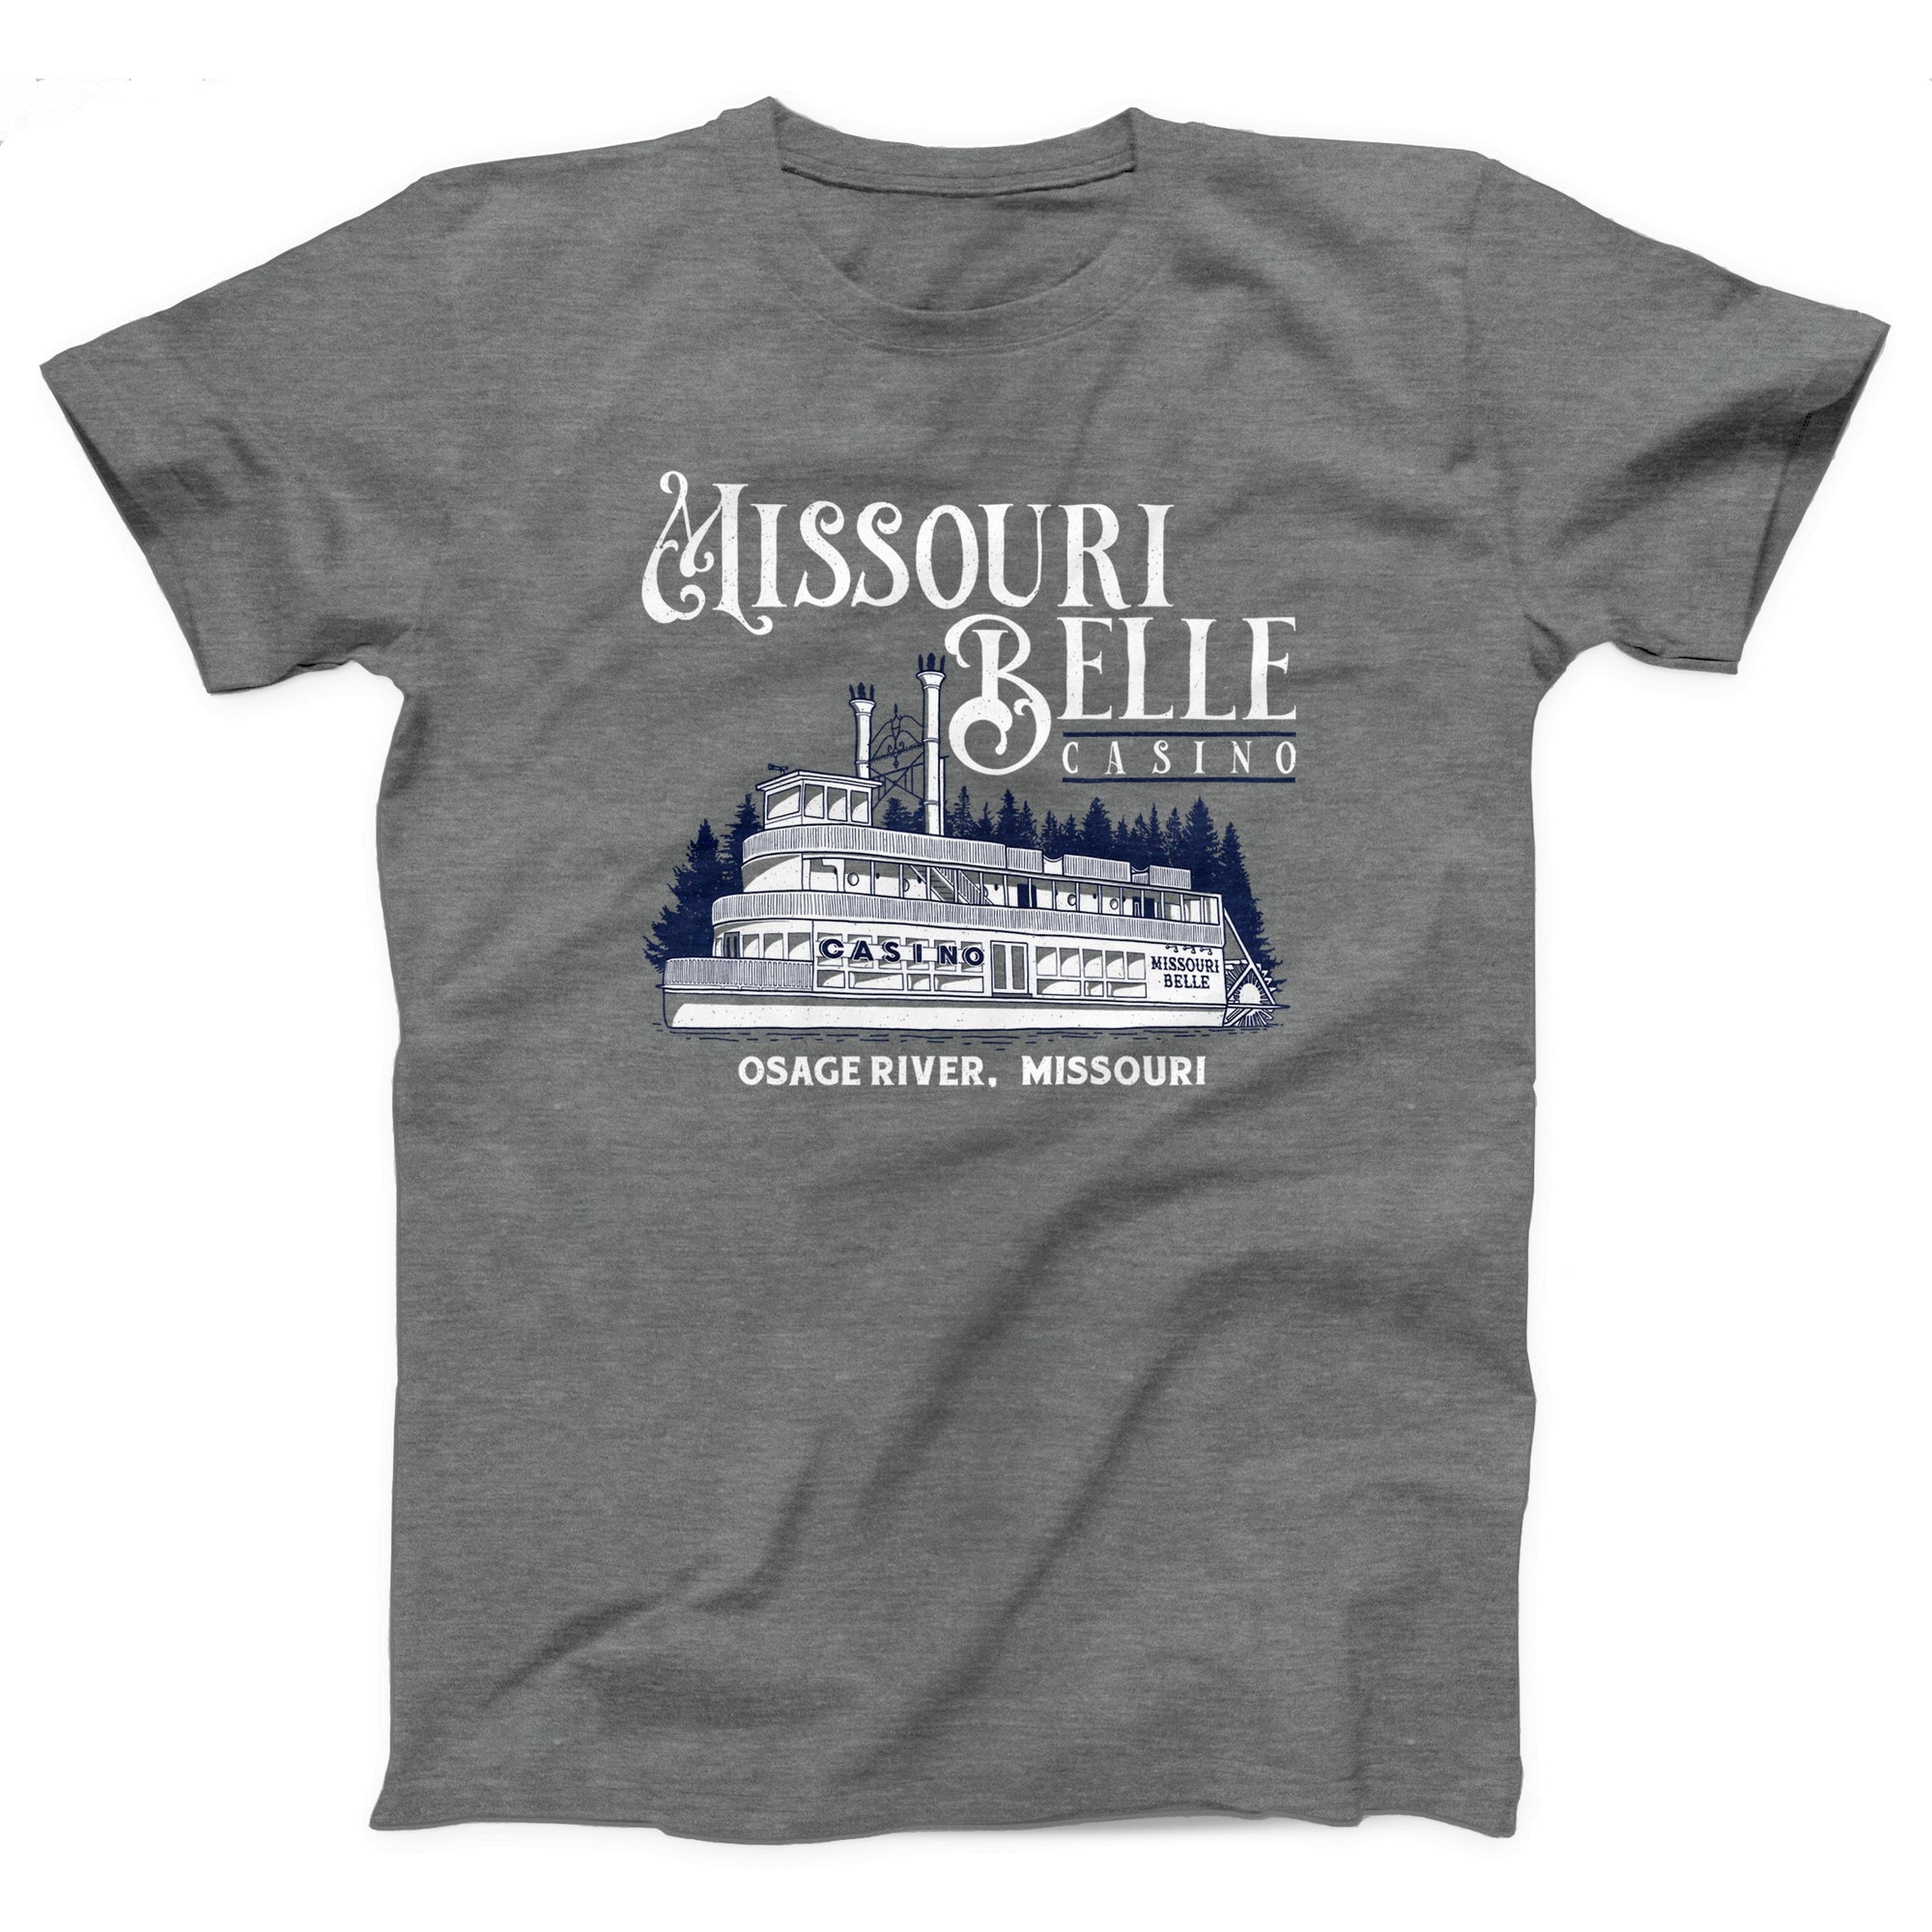 Missouri Belle Casino Adult Unisex T-Shirt - anishphilip